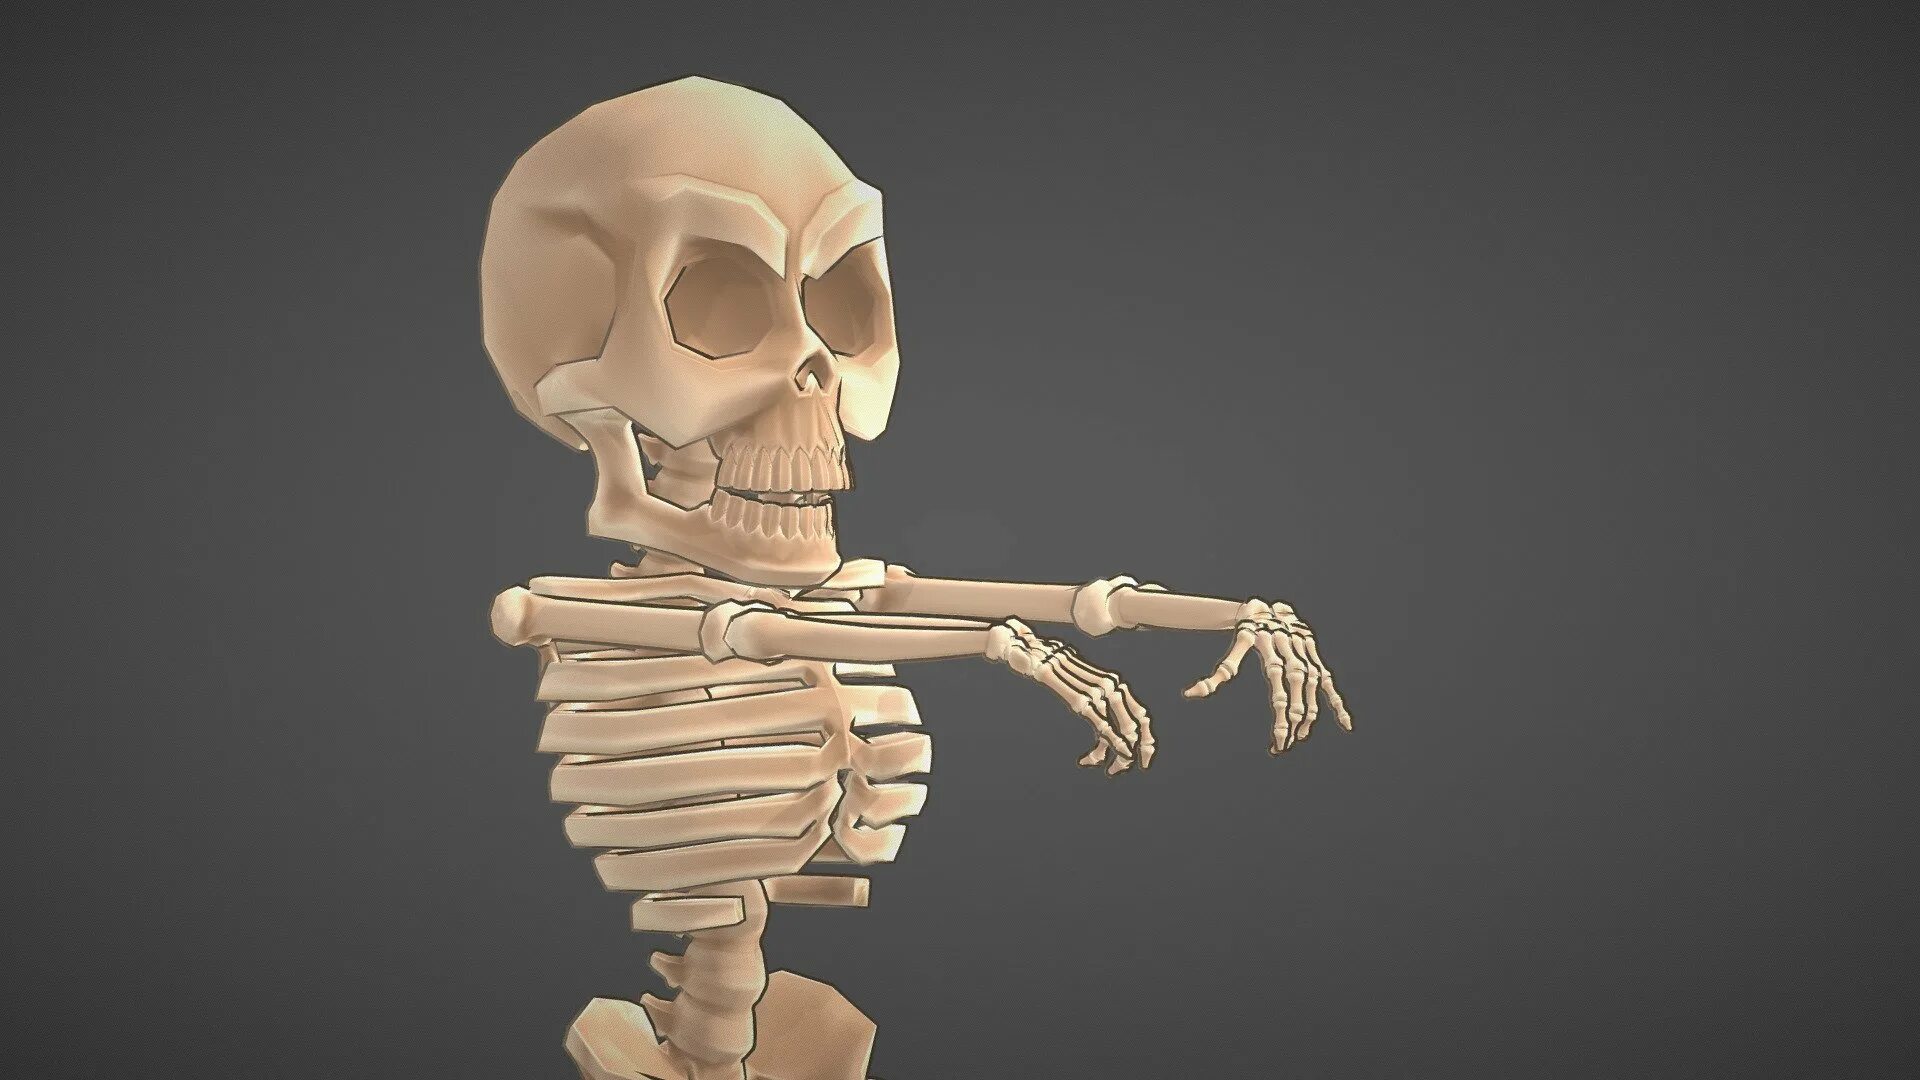 Low Poly Skeleton 3d model. Скелет Low Poly. Blender скелет. Skeleton 3d model.